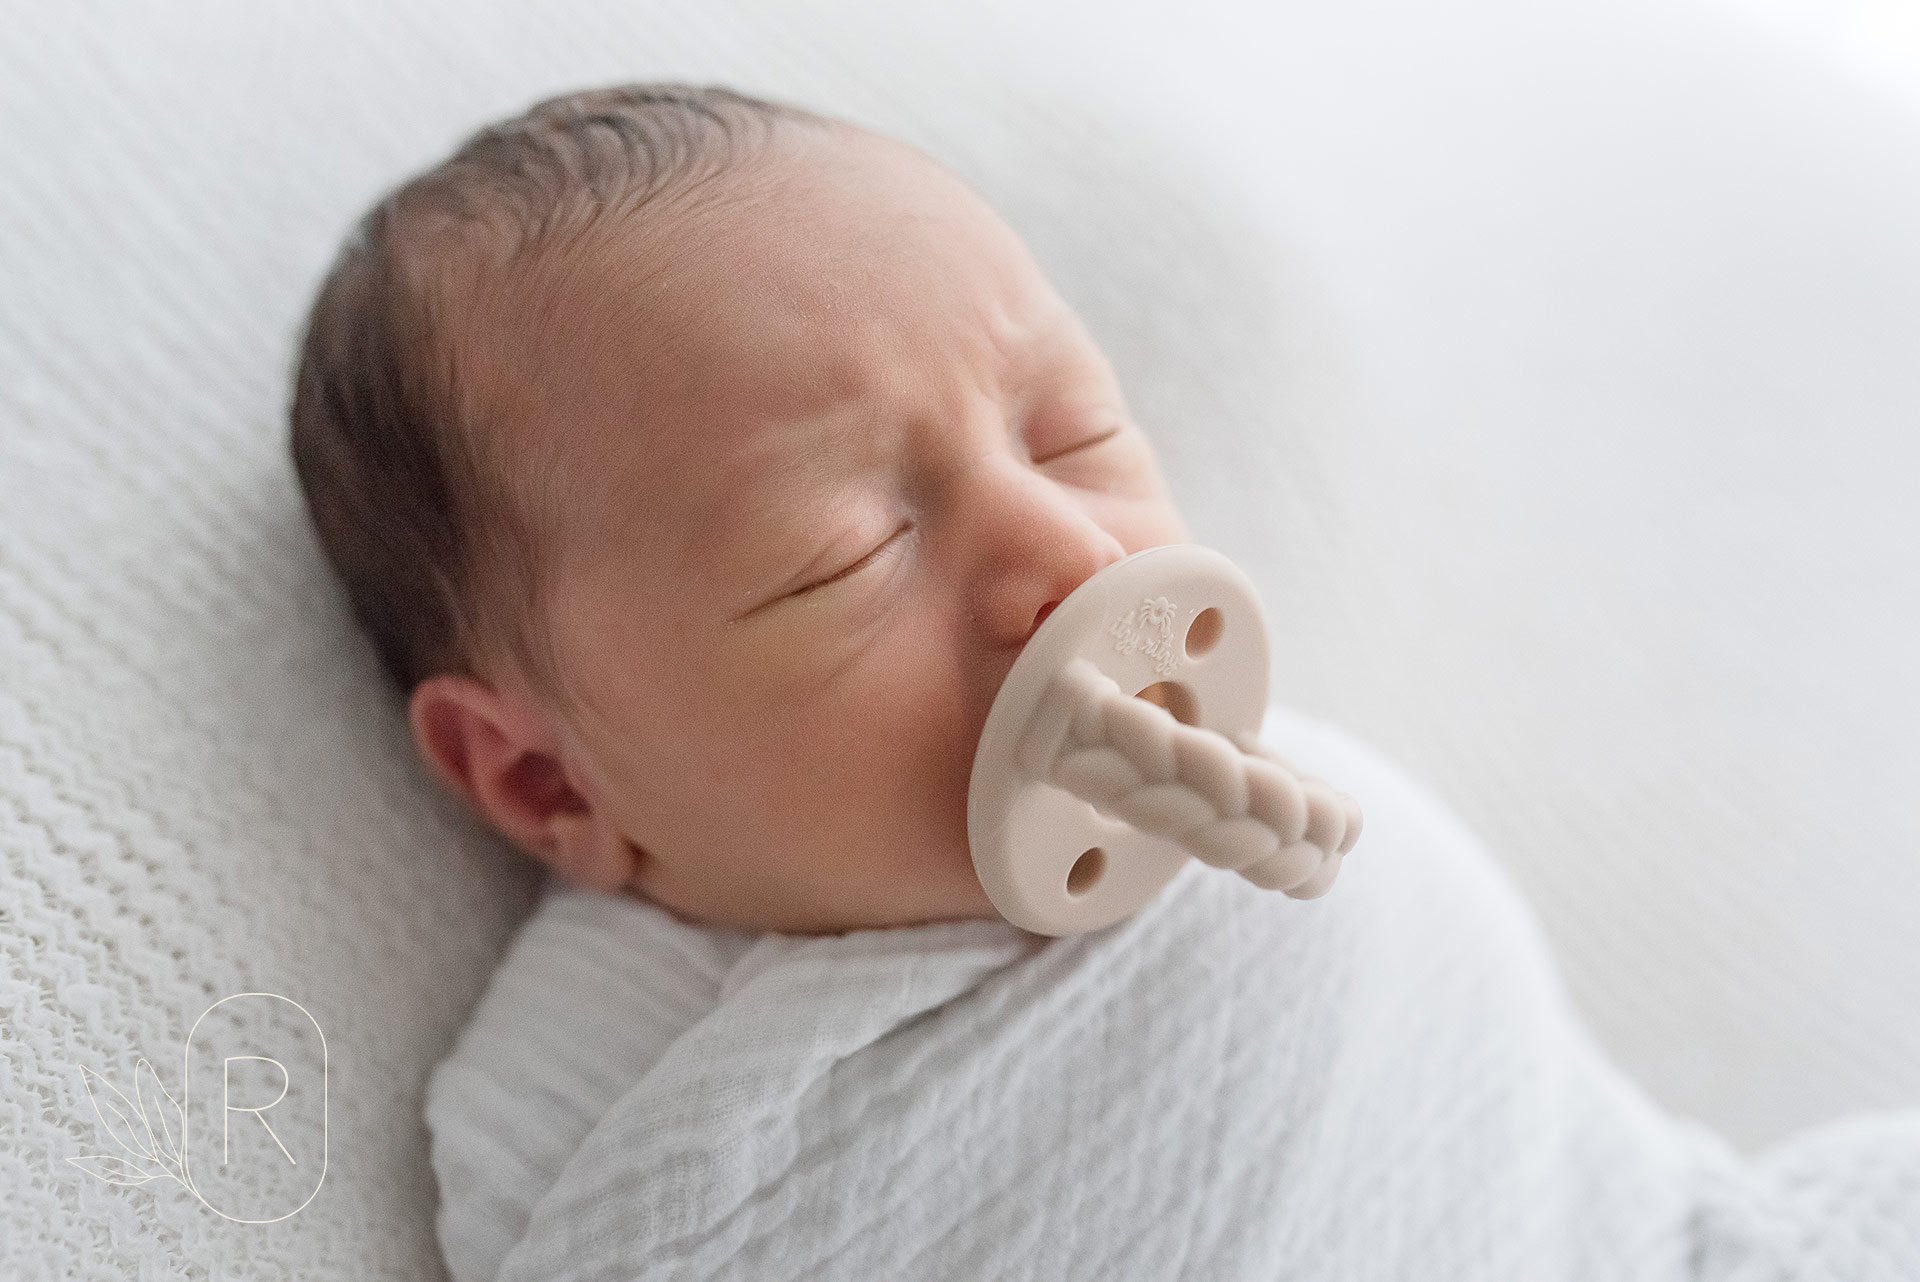 newborn-baby-with-pacifier-reflections-family-photography-niagara-ontario.jpeg